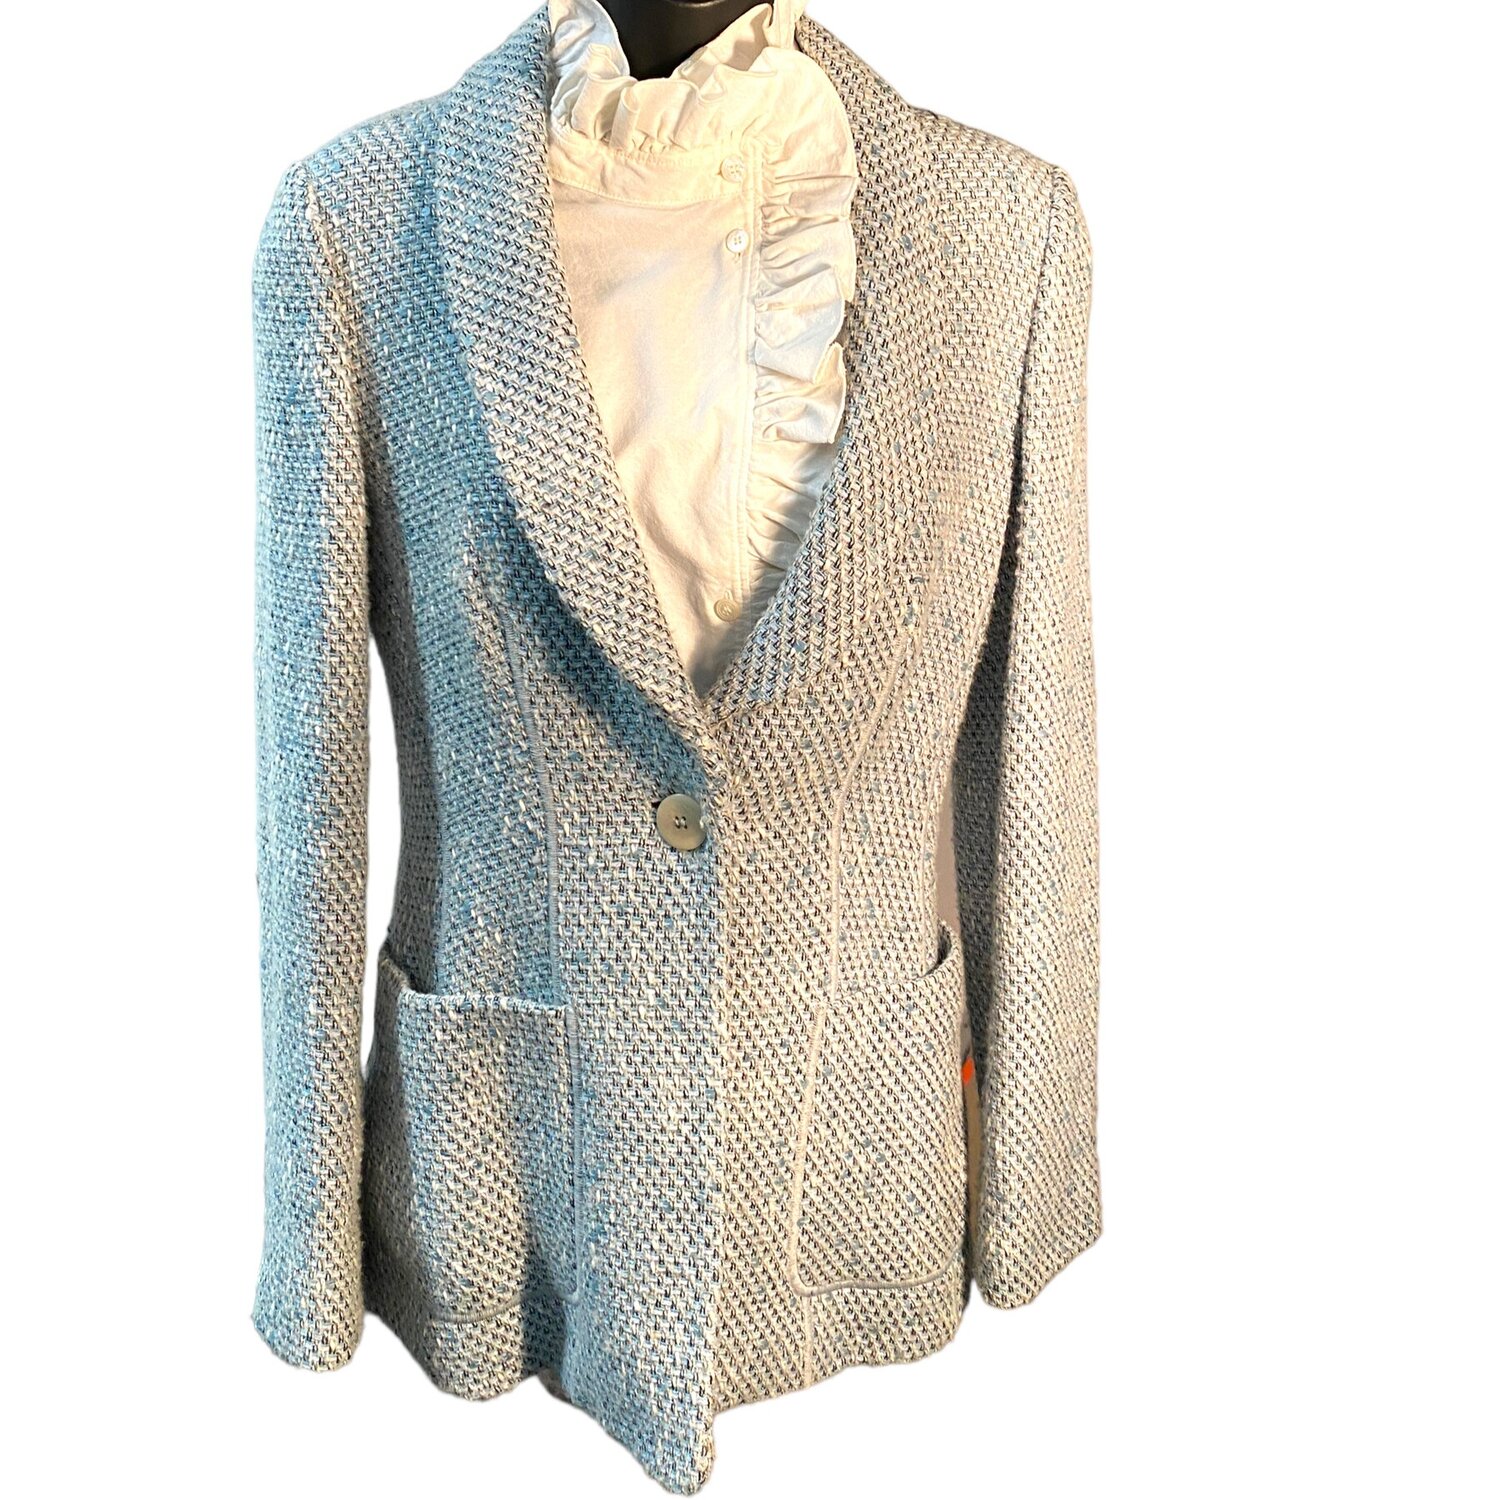 Armani Collezioni Textured Jacket, Size 6 — Mercer Island Thrift Shop